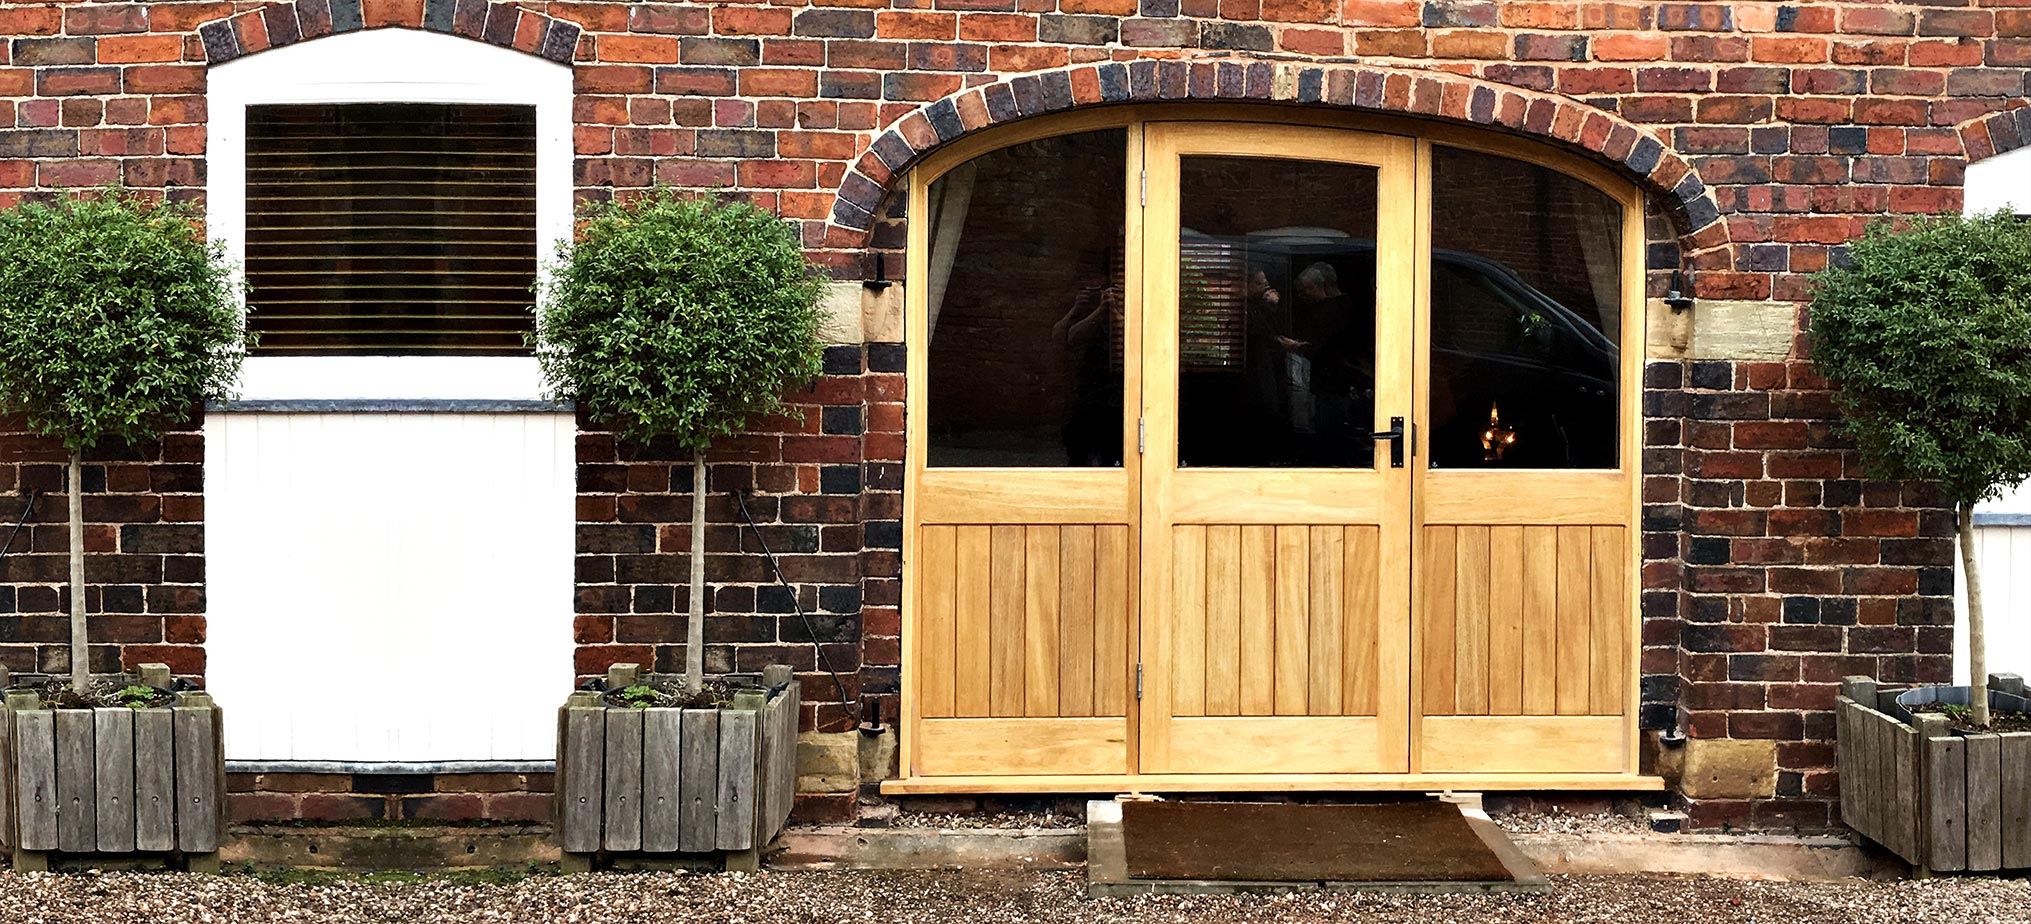 Bespoke Wooden Doors in Washed European Oak for Solid Brick Property